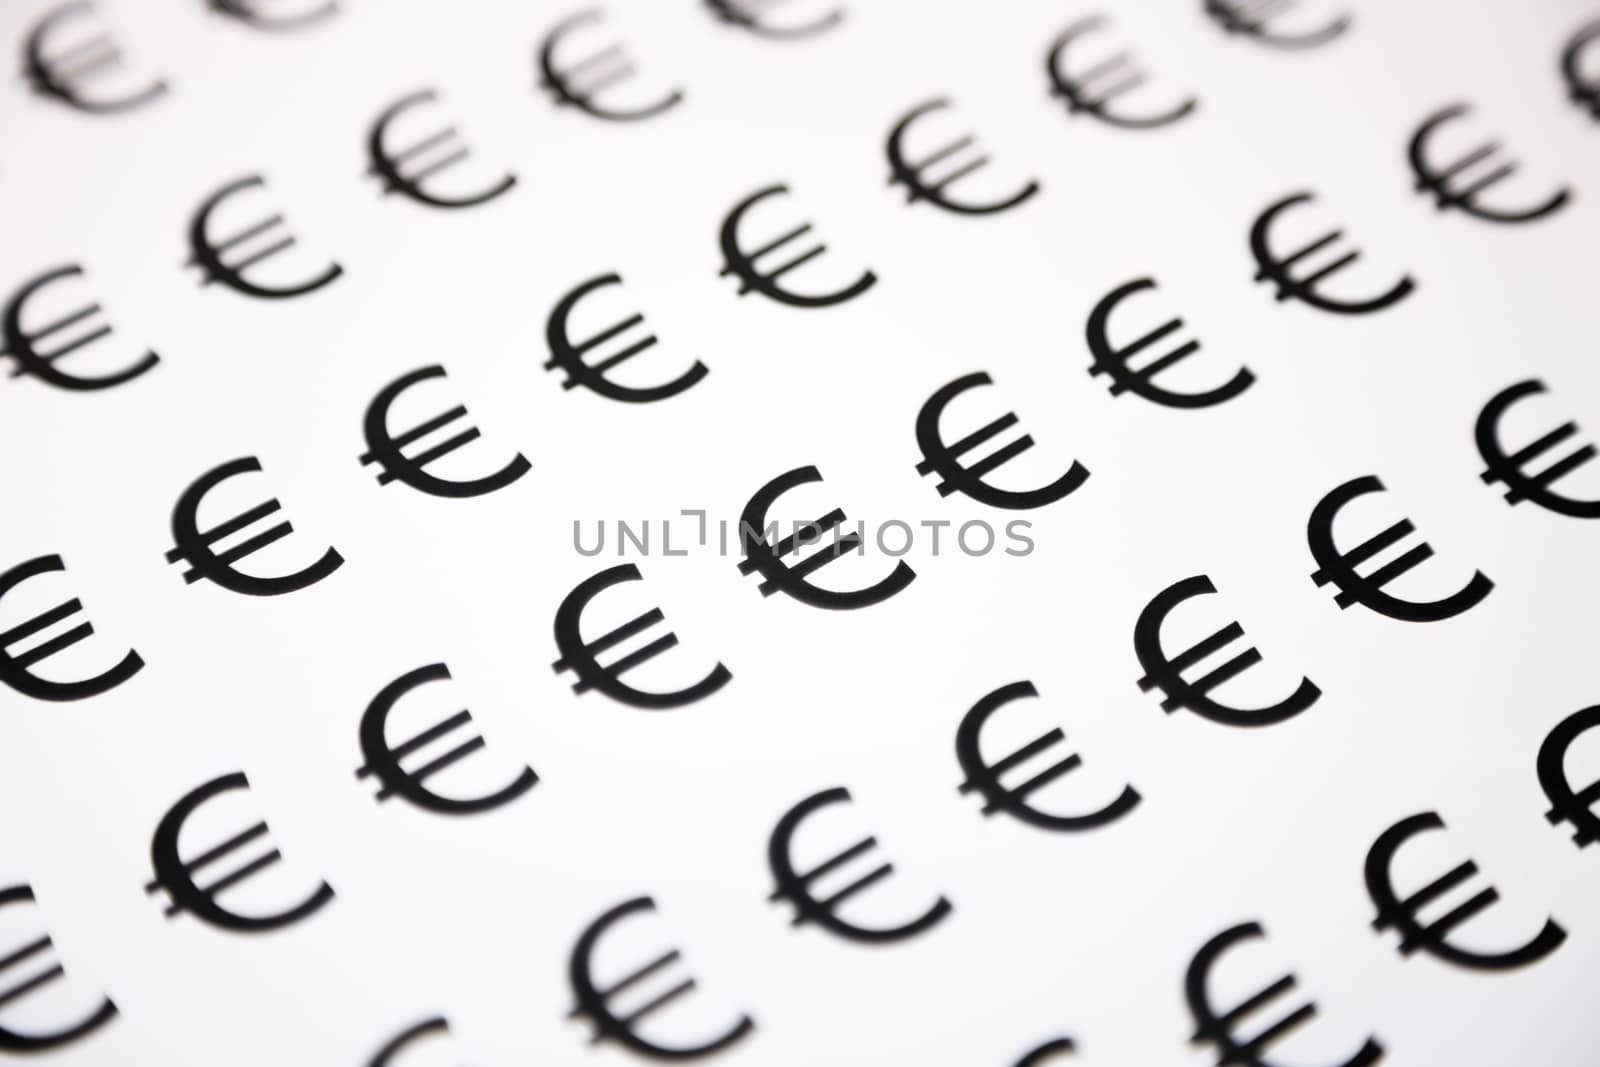 Euro money symbol by vinnstock